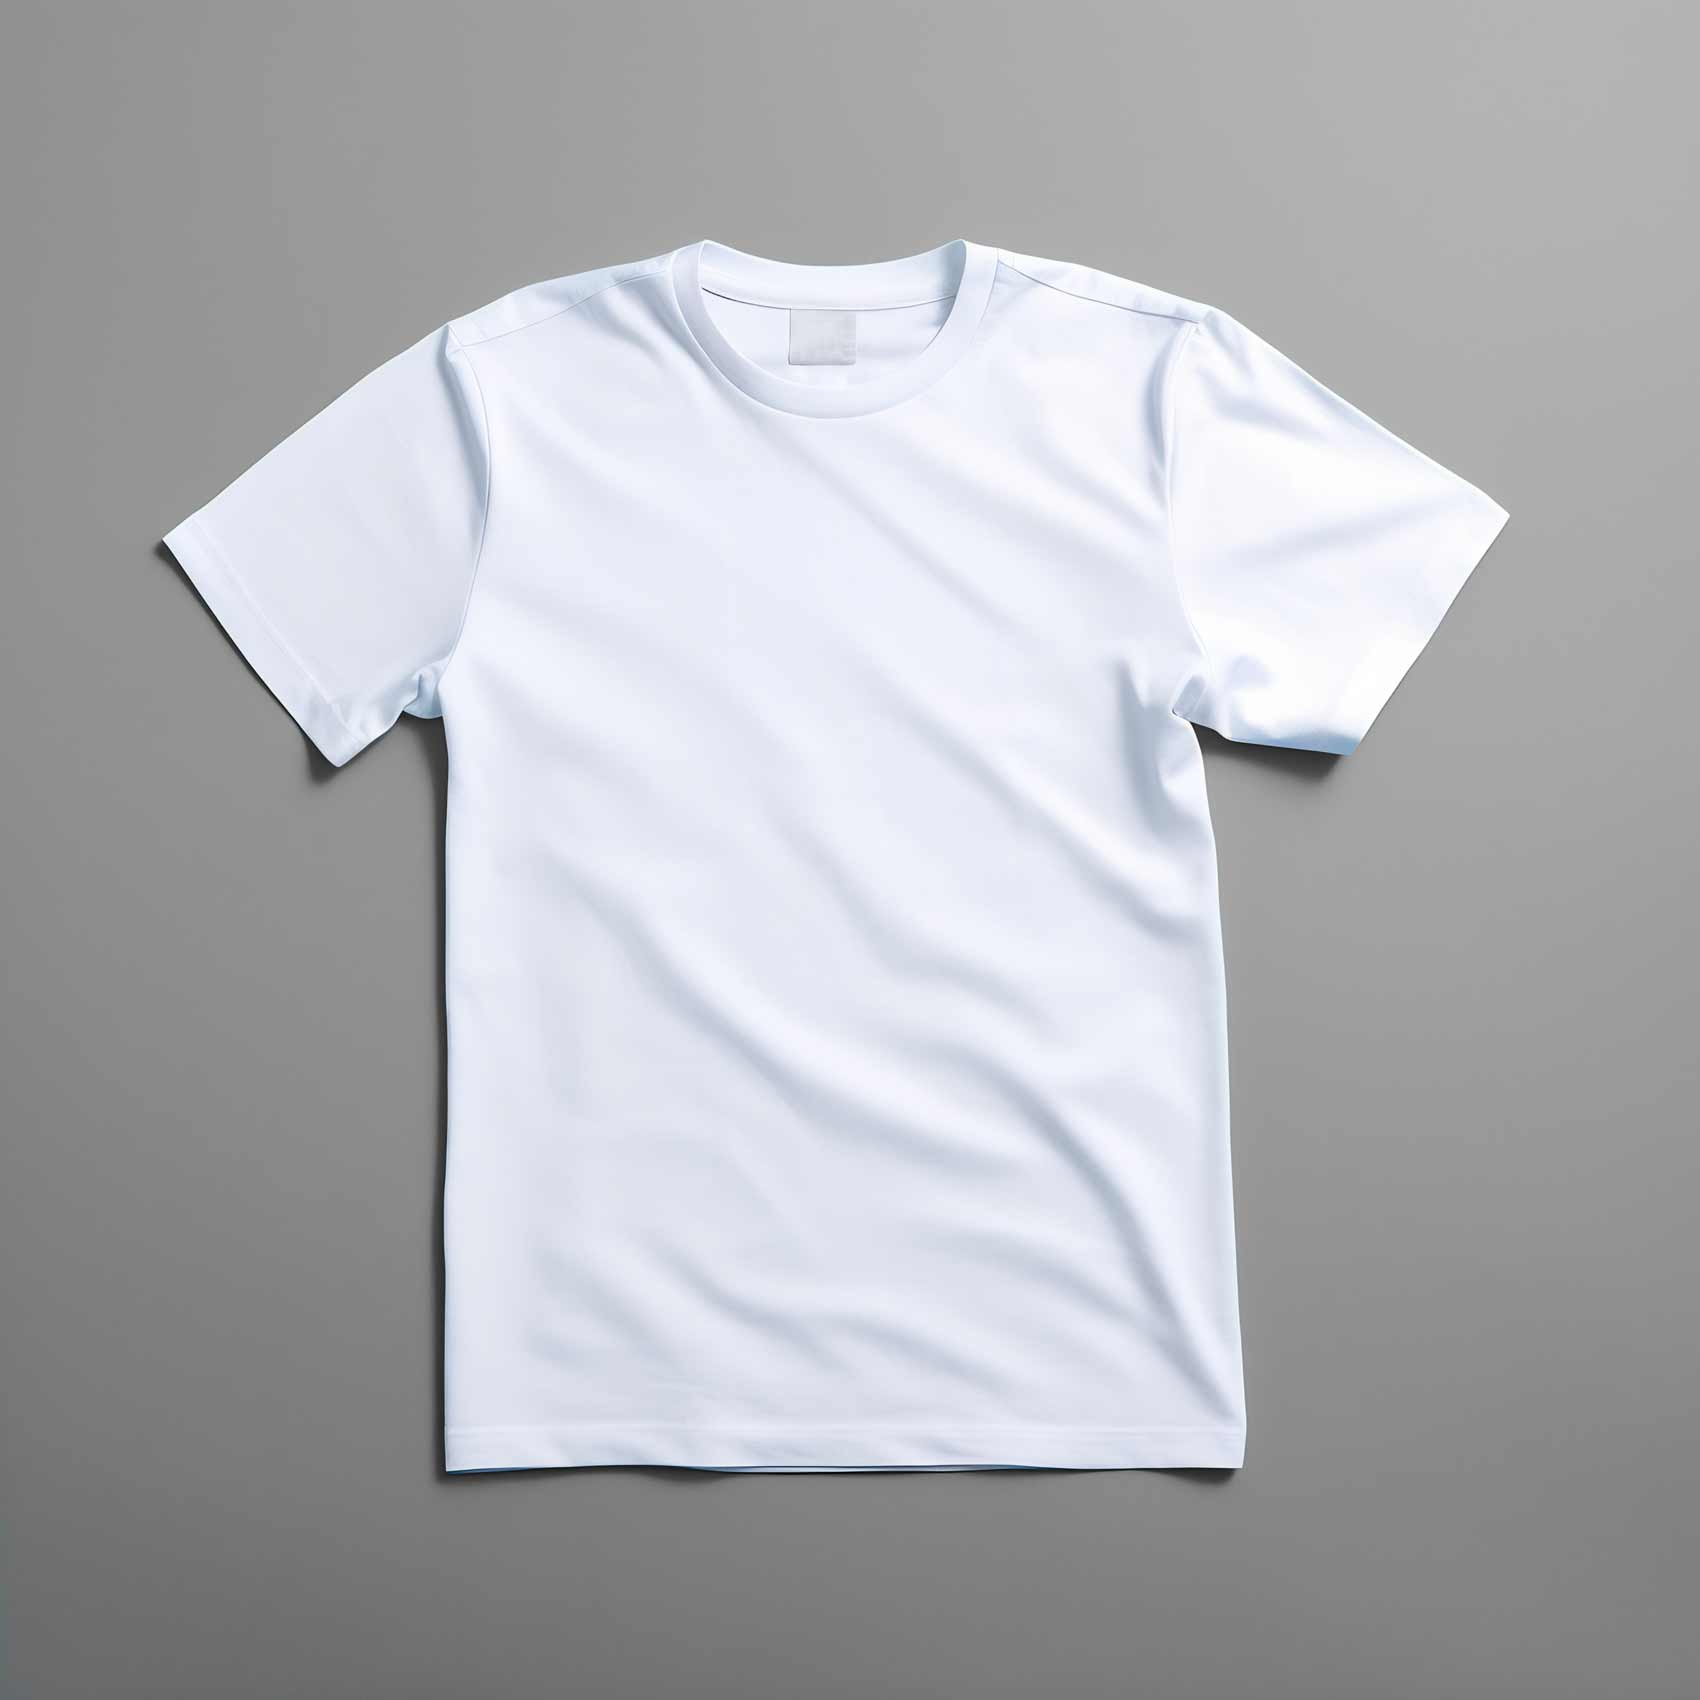 free white tshirt gildan bella canvas photoshop mockup displaying a customized t-shirt in a korean style